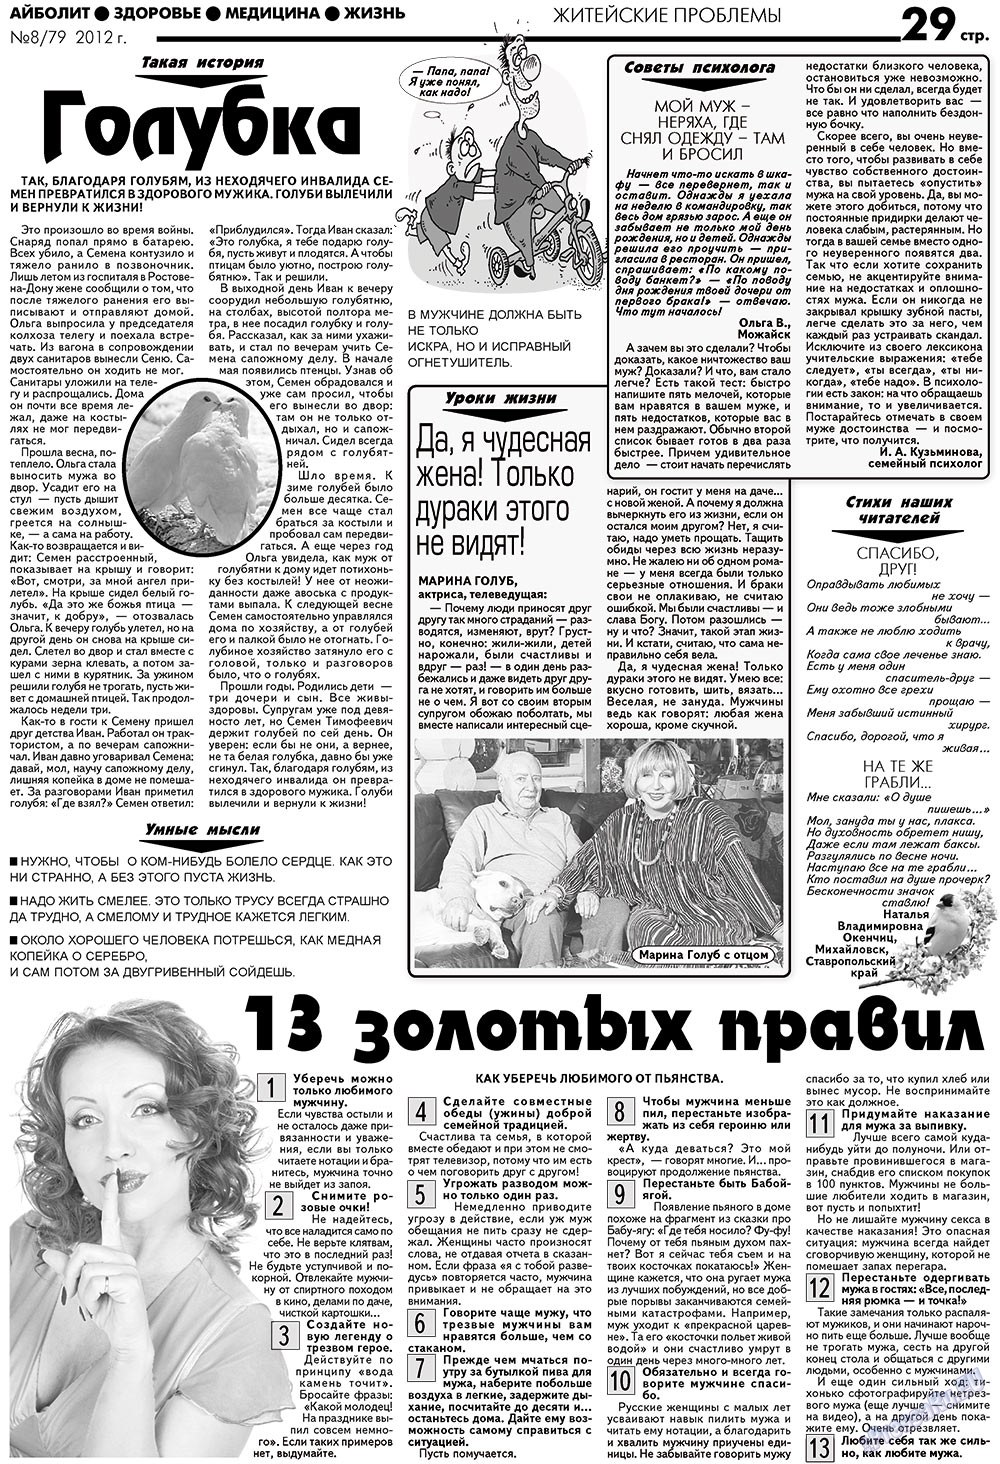 АйБолит (газета). 2012 год, номер 8, стр. 29